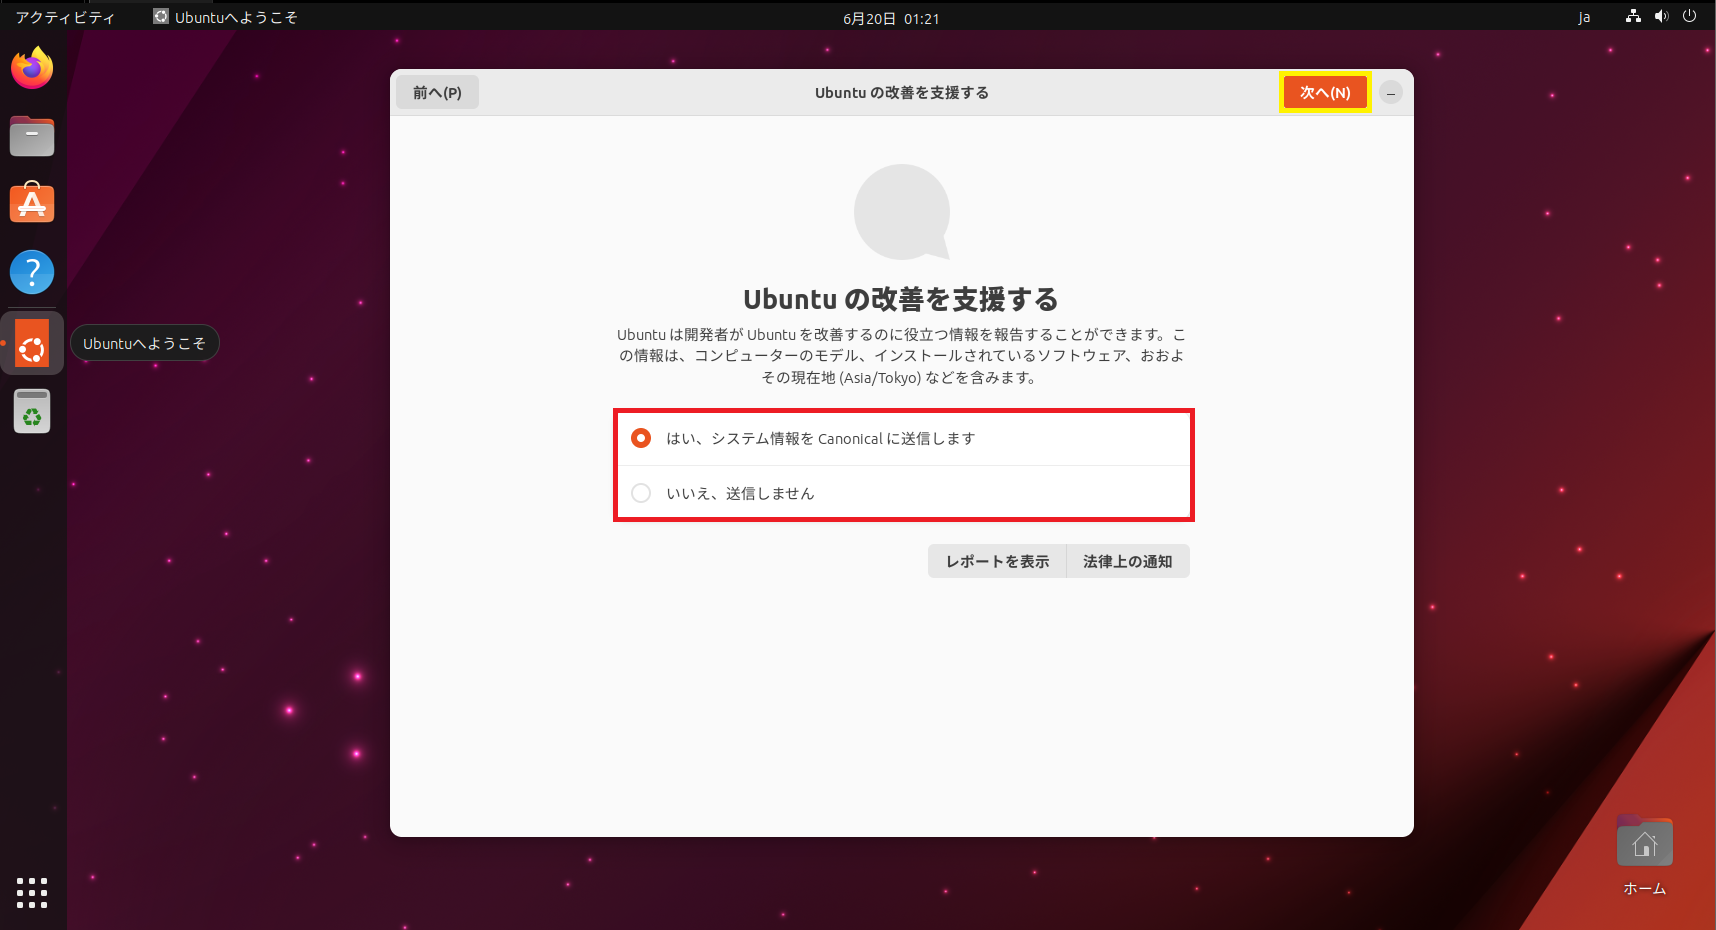 Ubuntuの改善を支援する